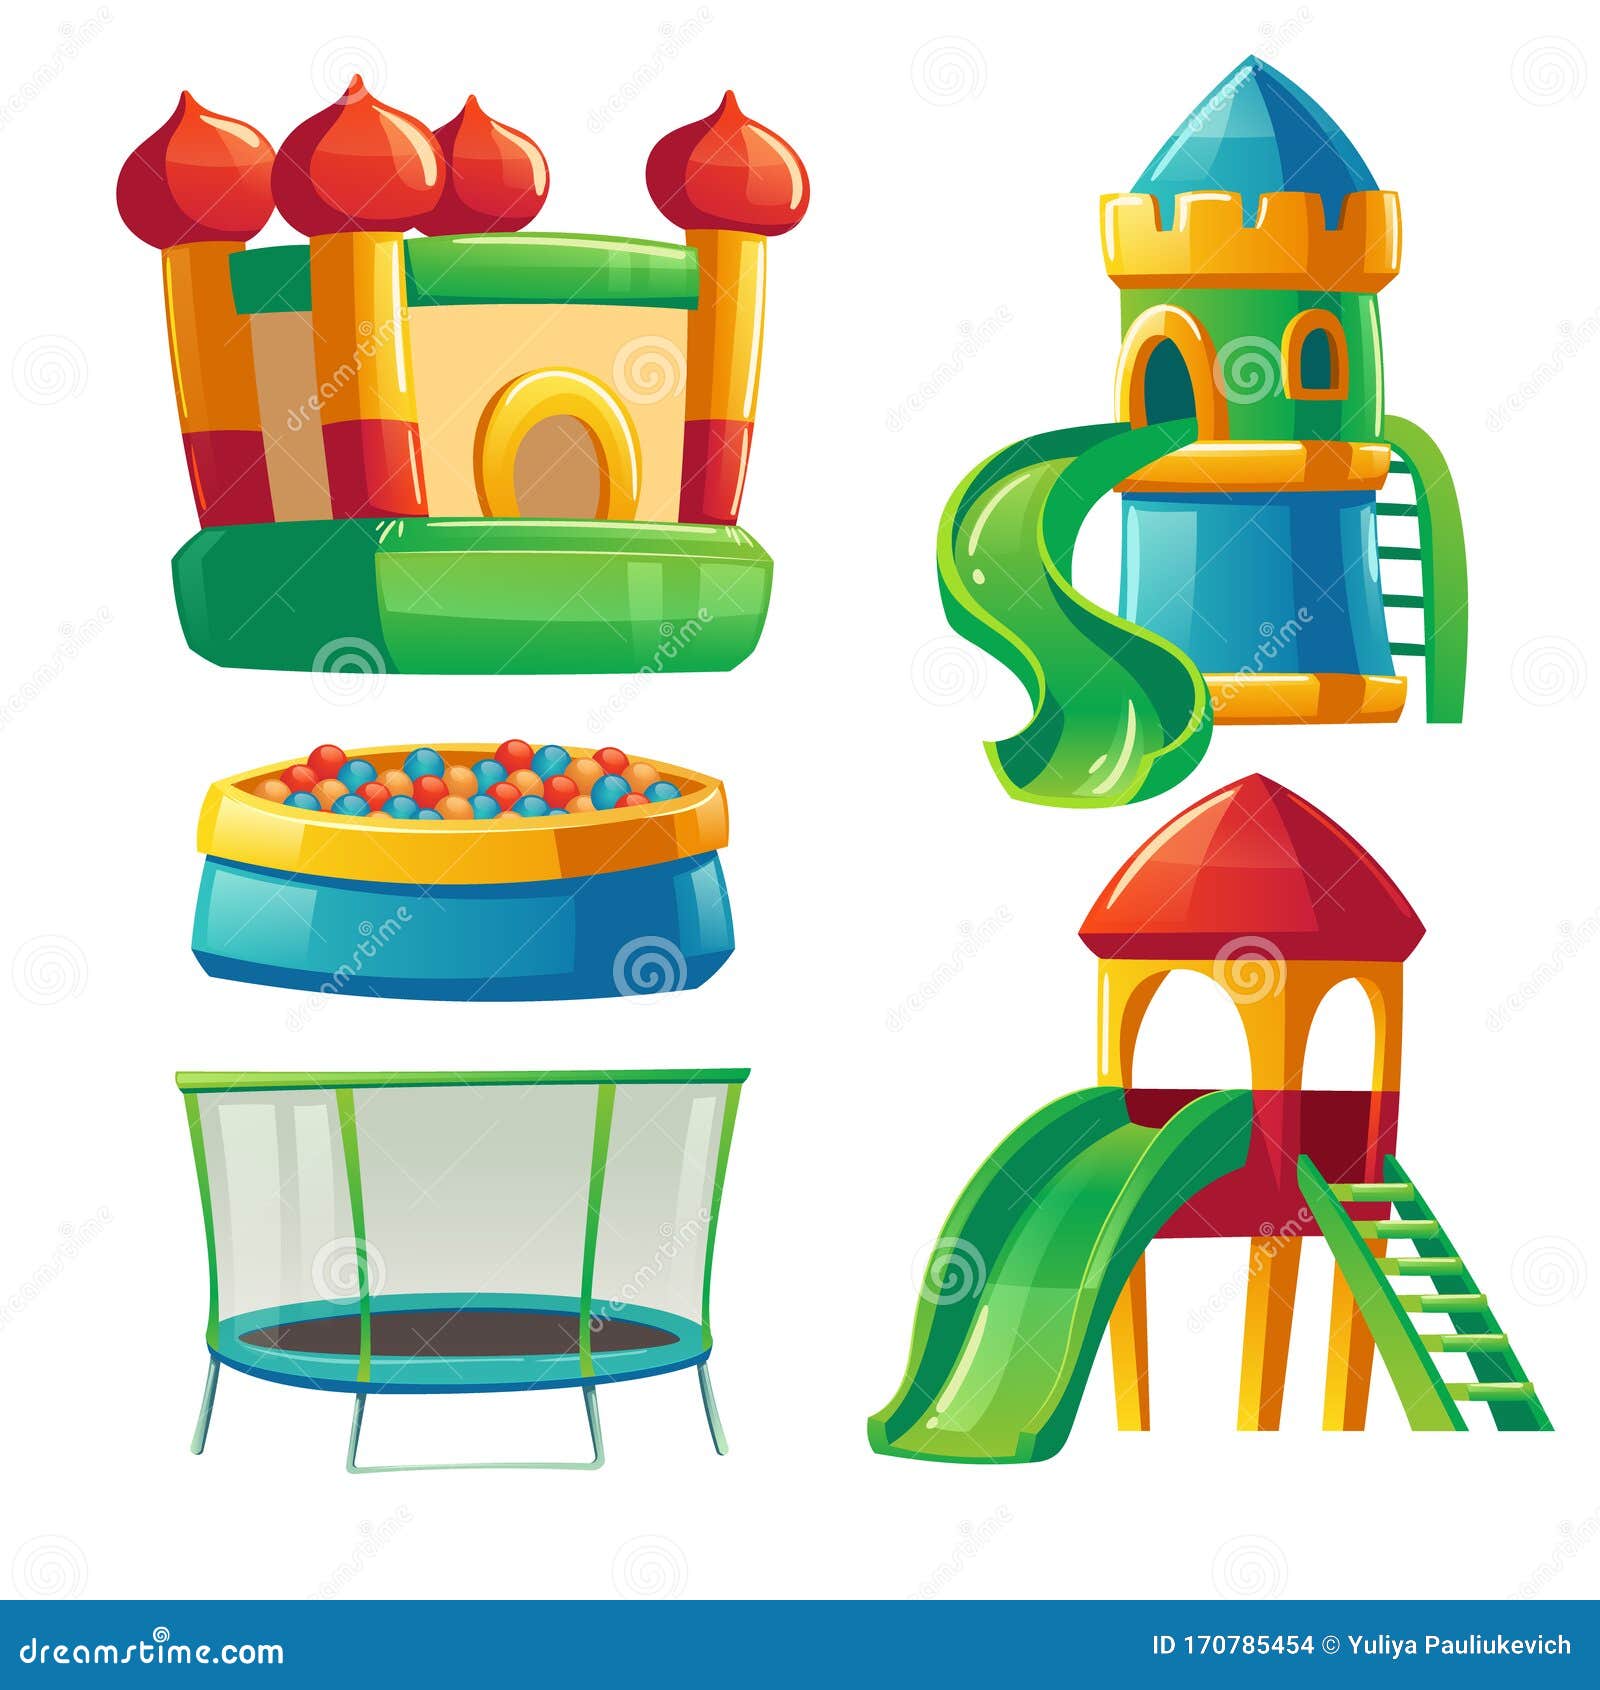 Playroom In Kindergarten With Slide And Trampoline Stock Vector